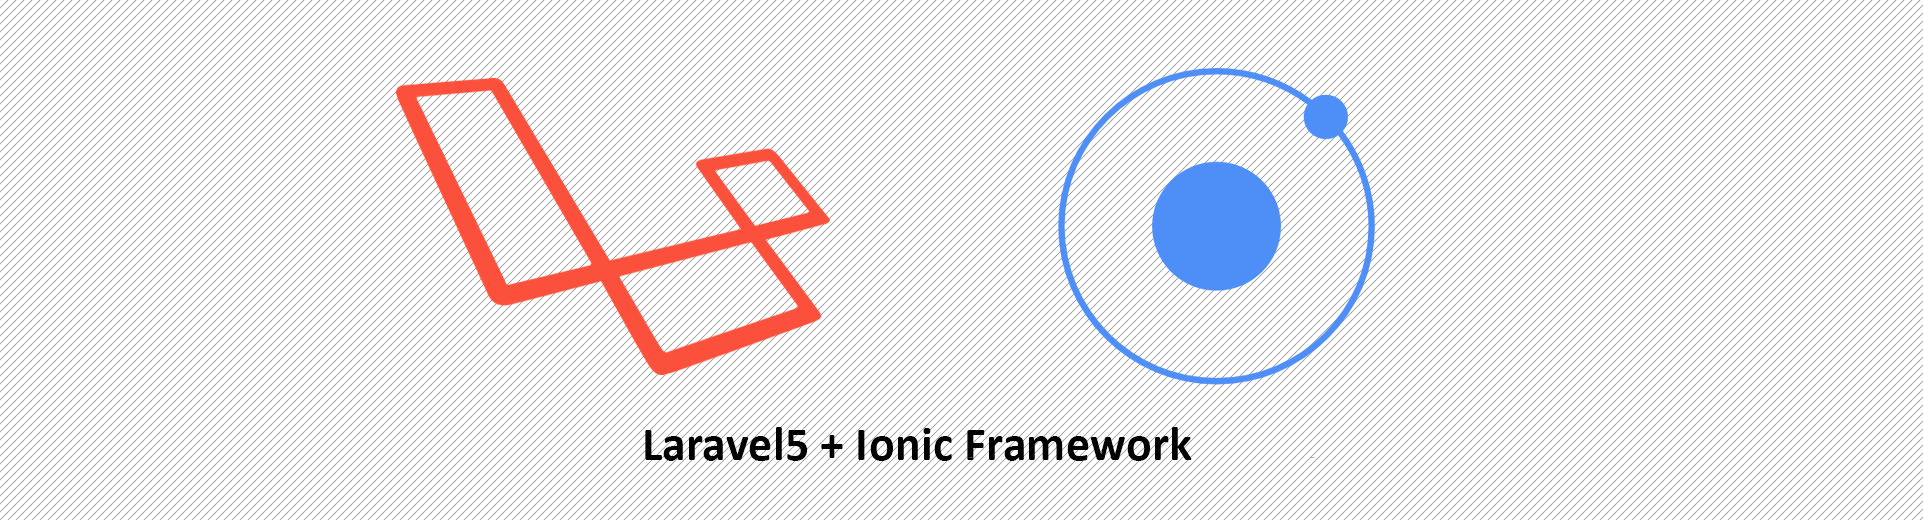 Build an app with Ionic Framework & Laravel5